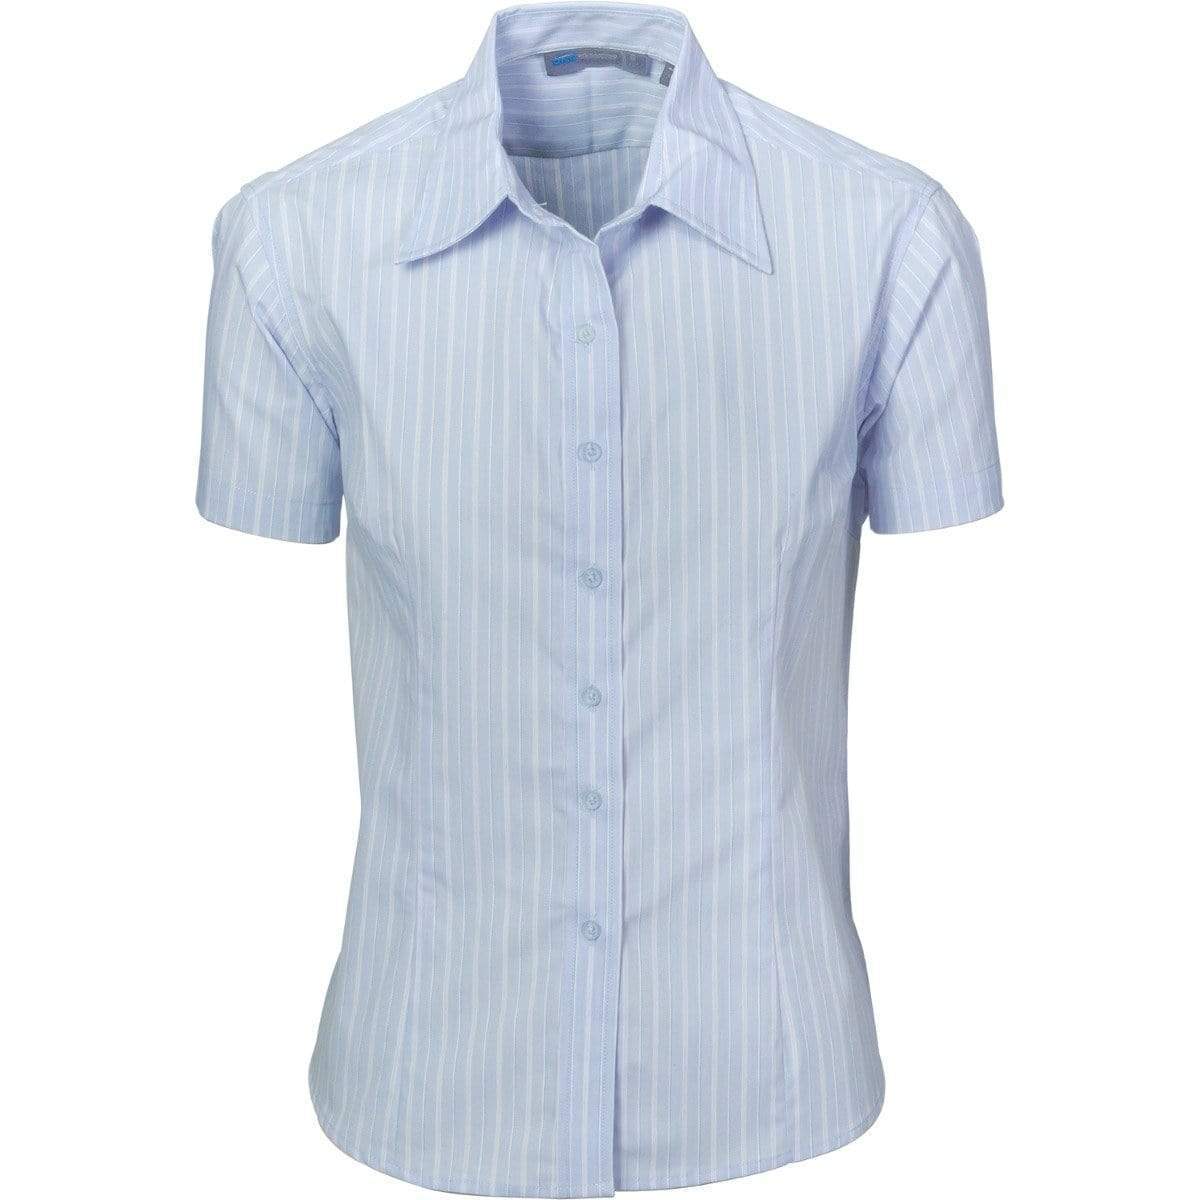 Dnc Workwear Ladies Stretch Yarn Dyed Contrast Stripe Short Sleeve Shirt - 4233 Corporate Wear DNC Workwear Light Blue/White/Blue 6 